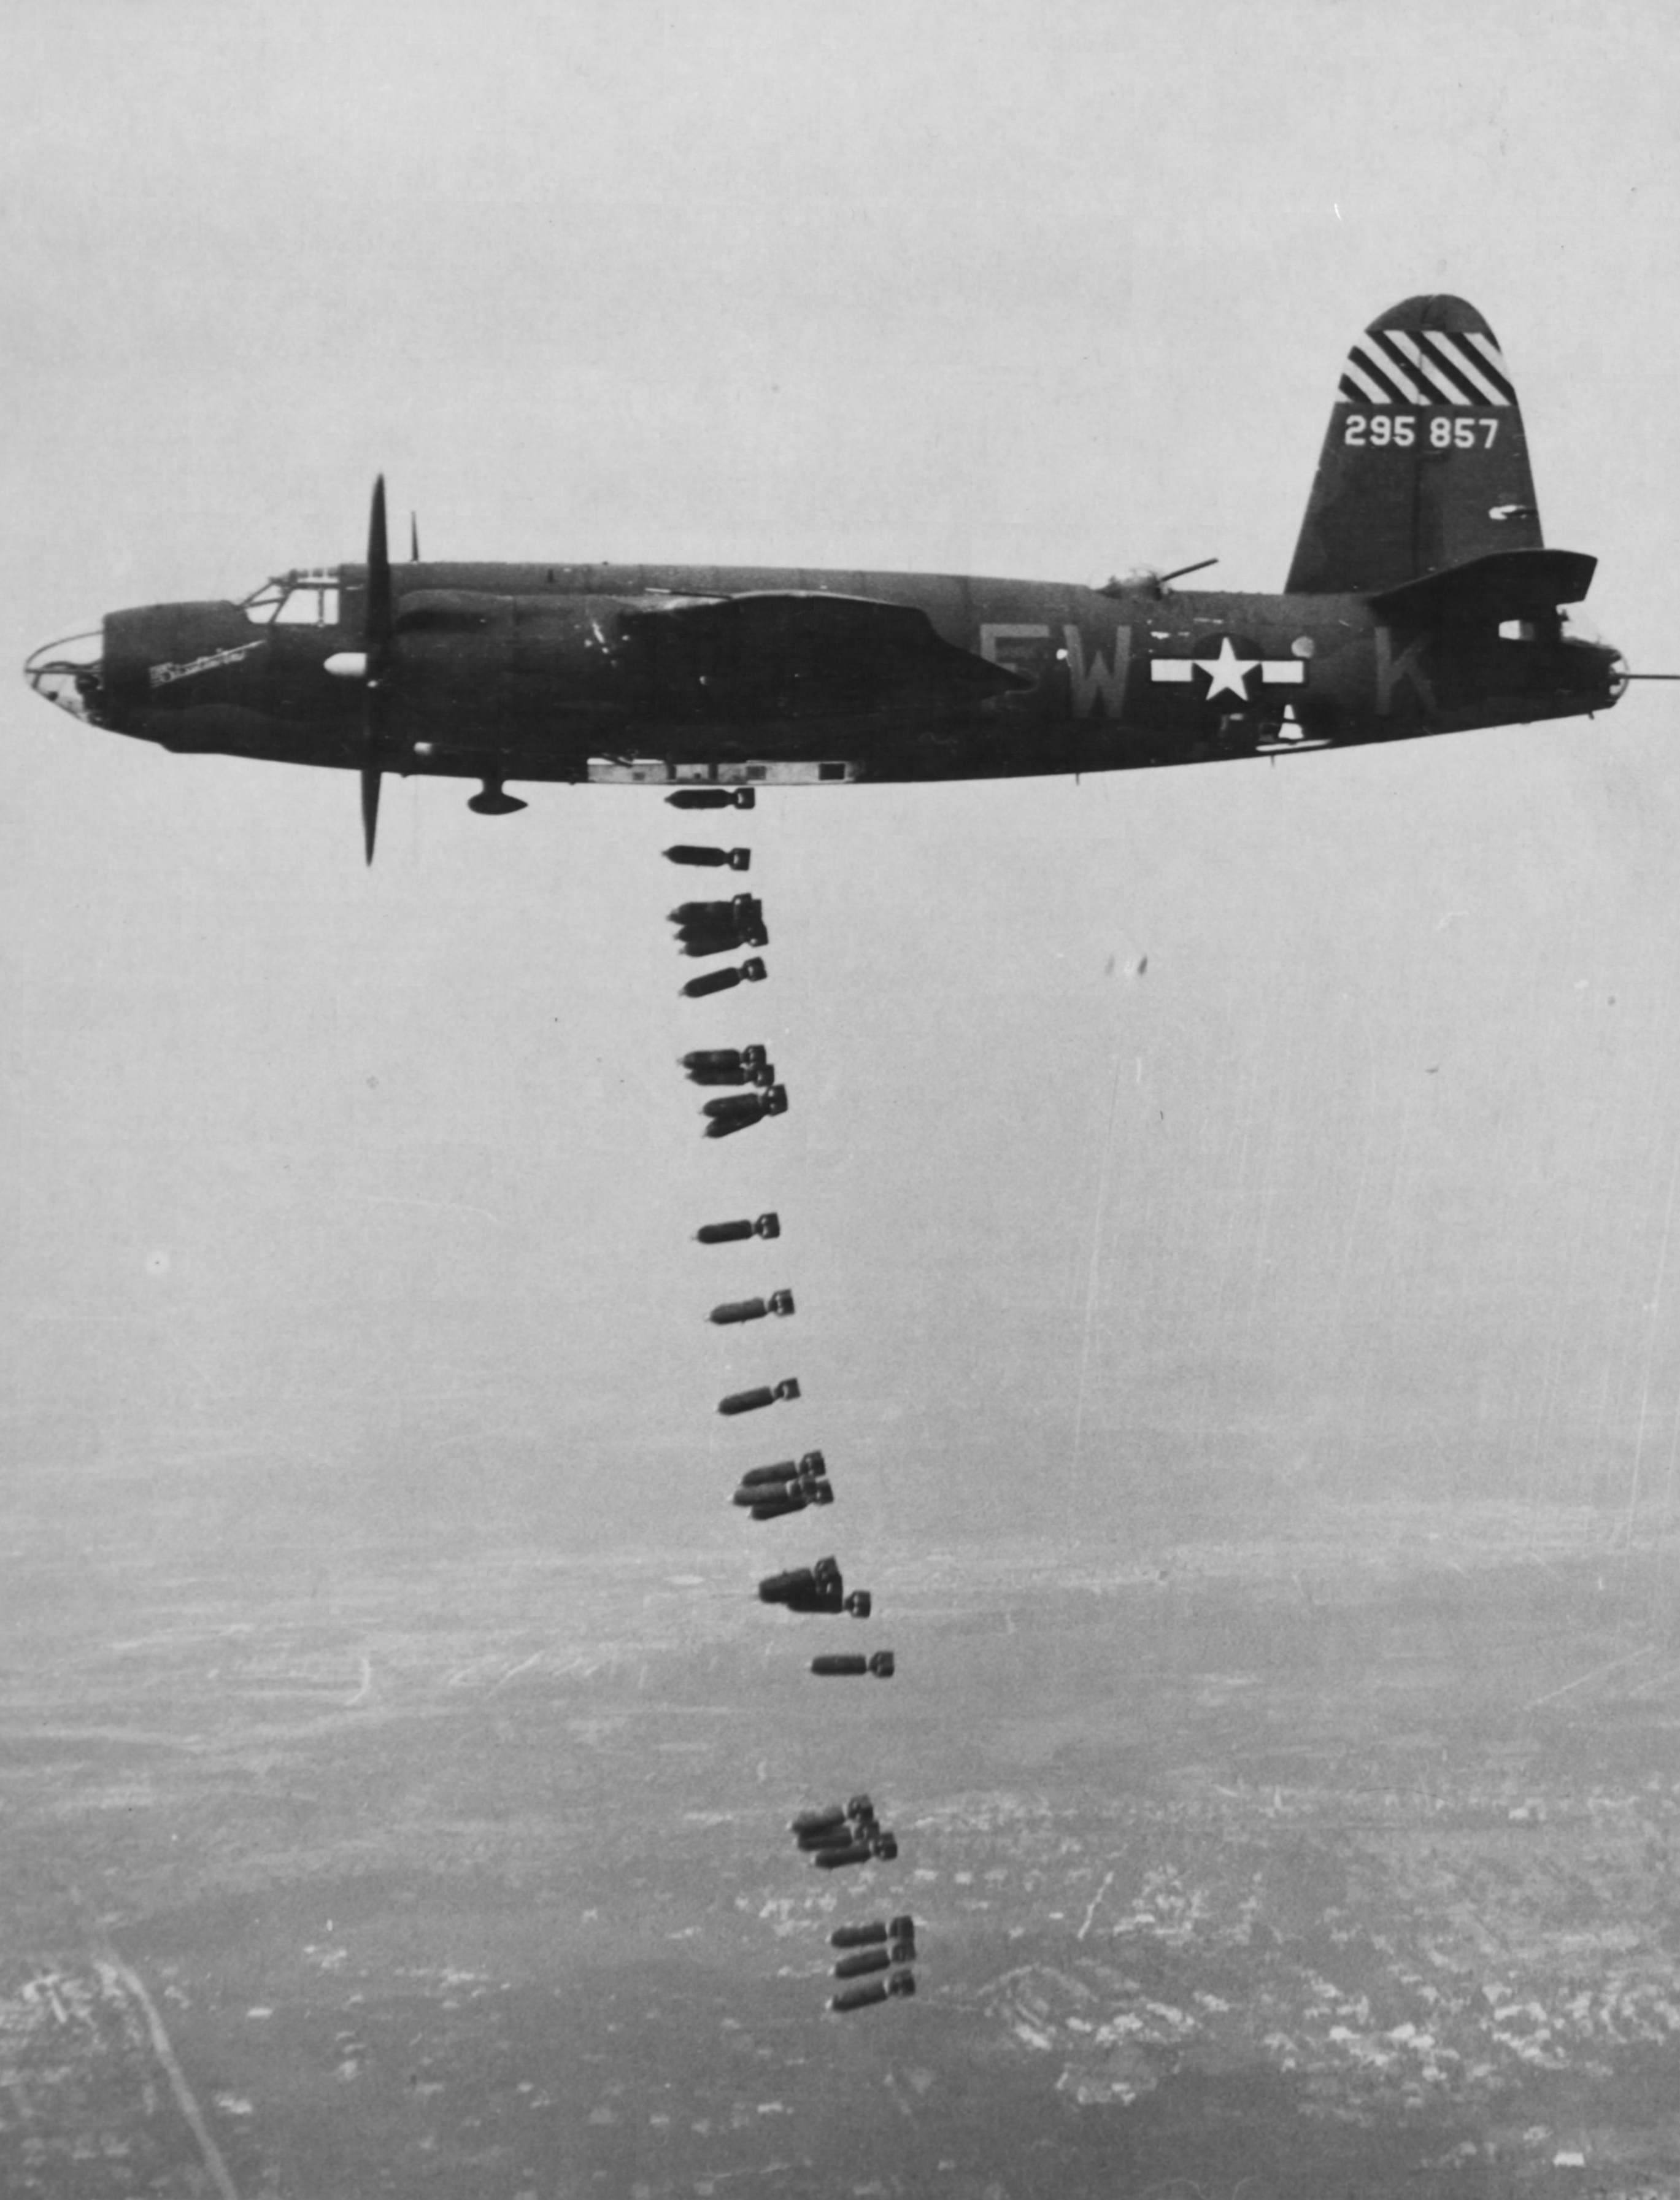 B-26B Marauder “Shootin’ In” of the 556th Bomb Squadron releasing its bomb load, 1944-45